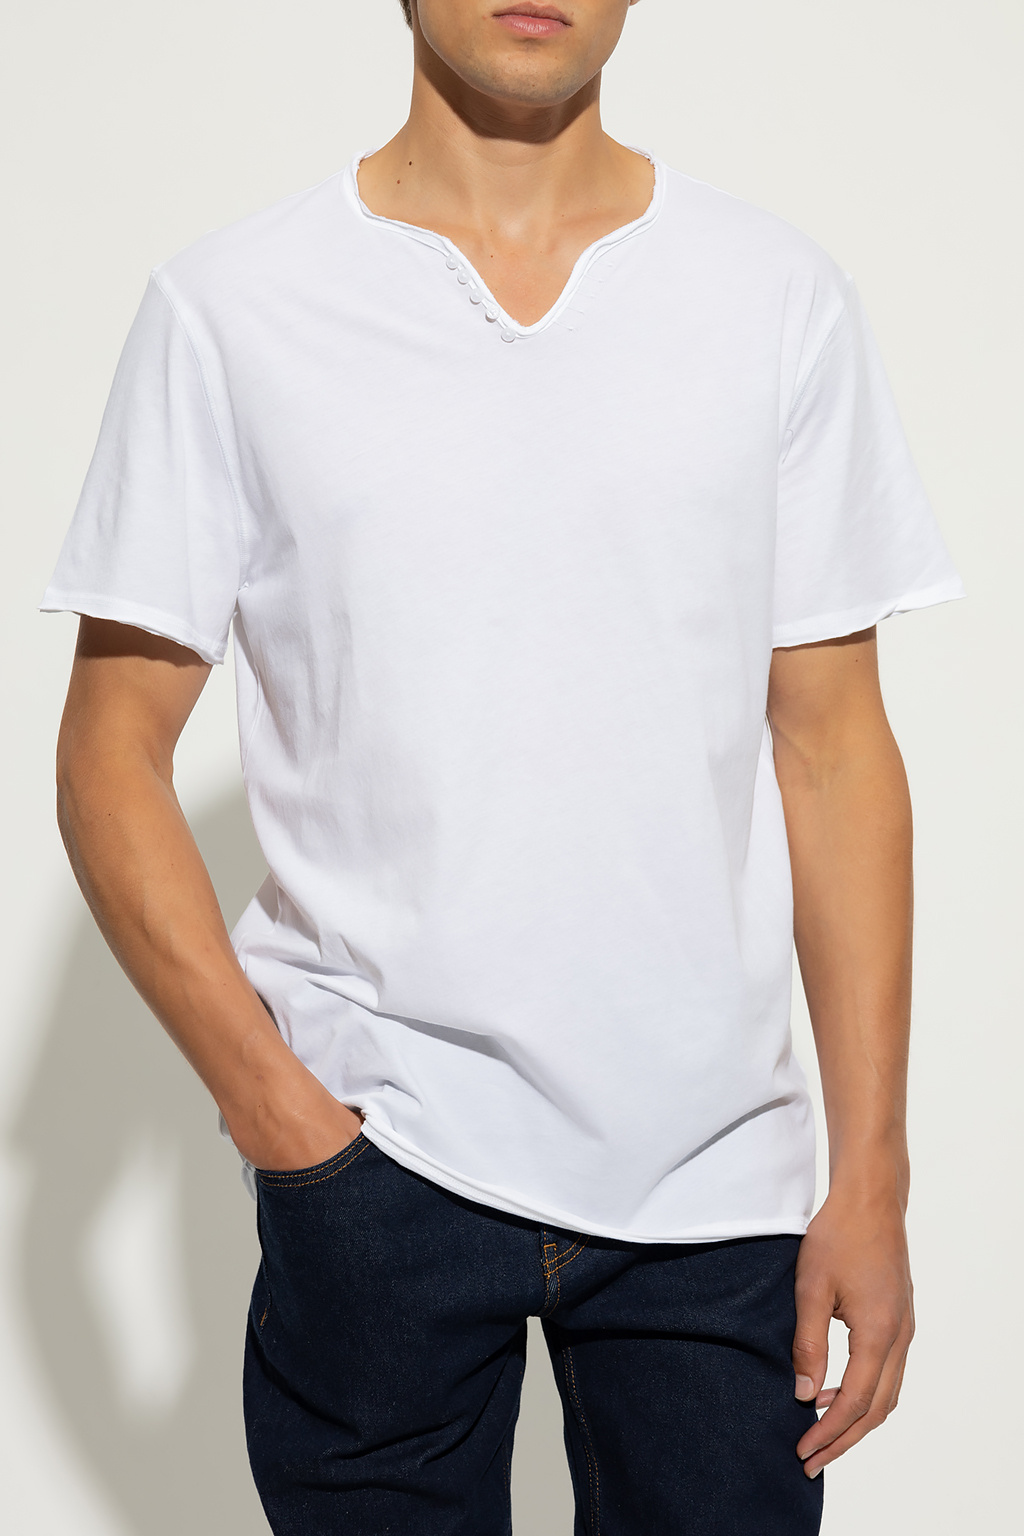 Zadig & Voltaire ‘Monastir’ cotton T-shirt